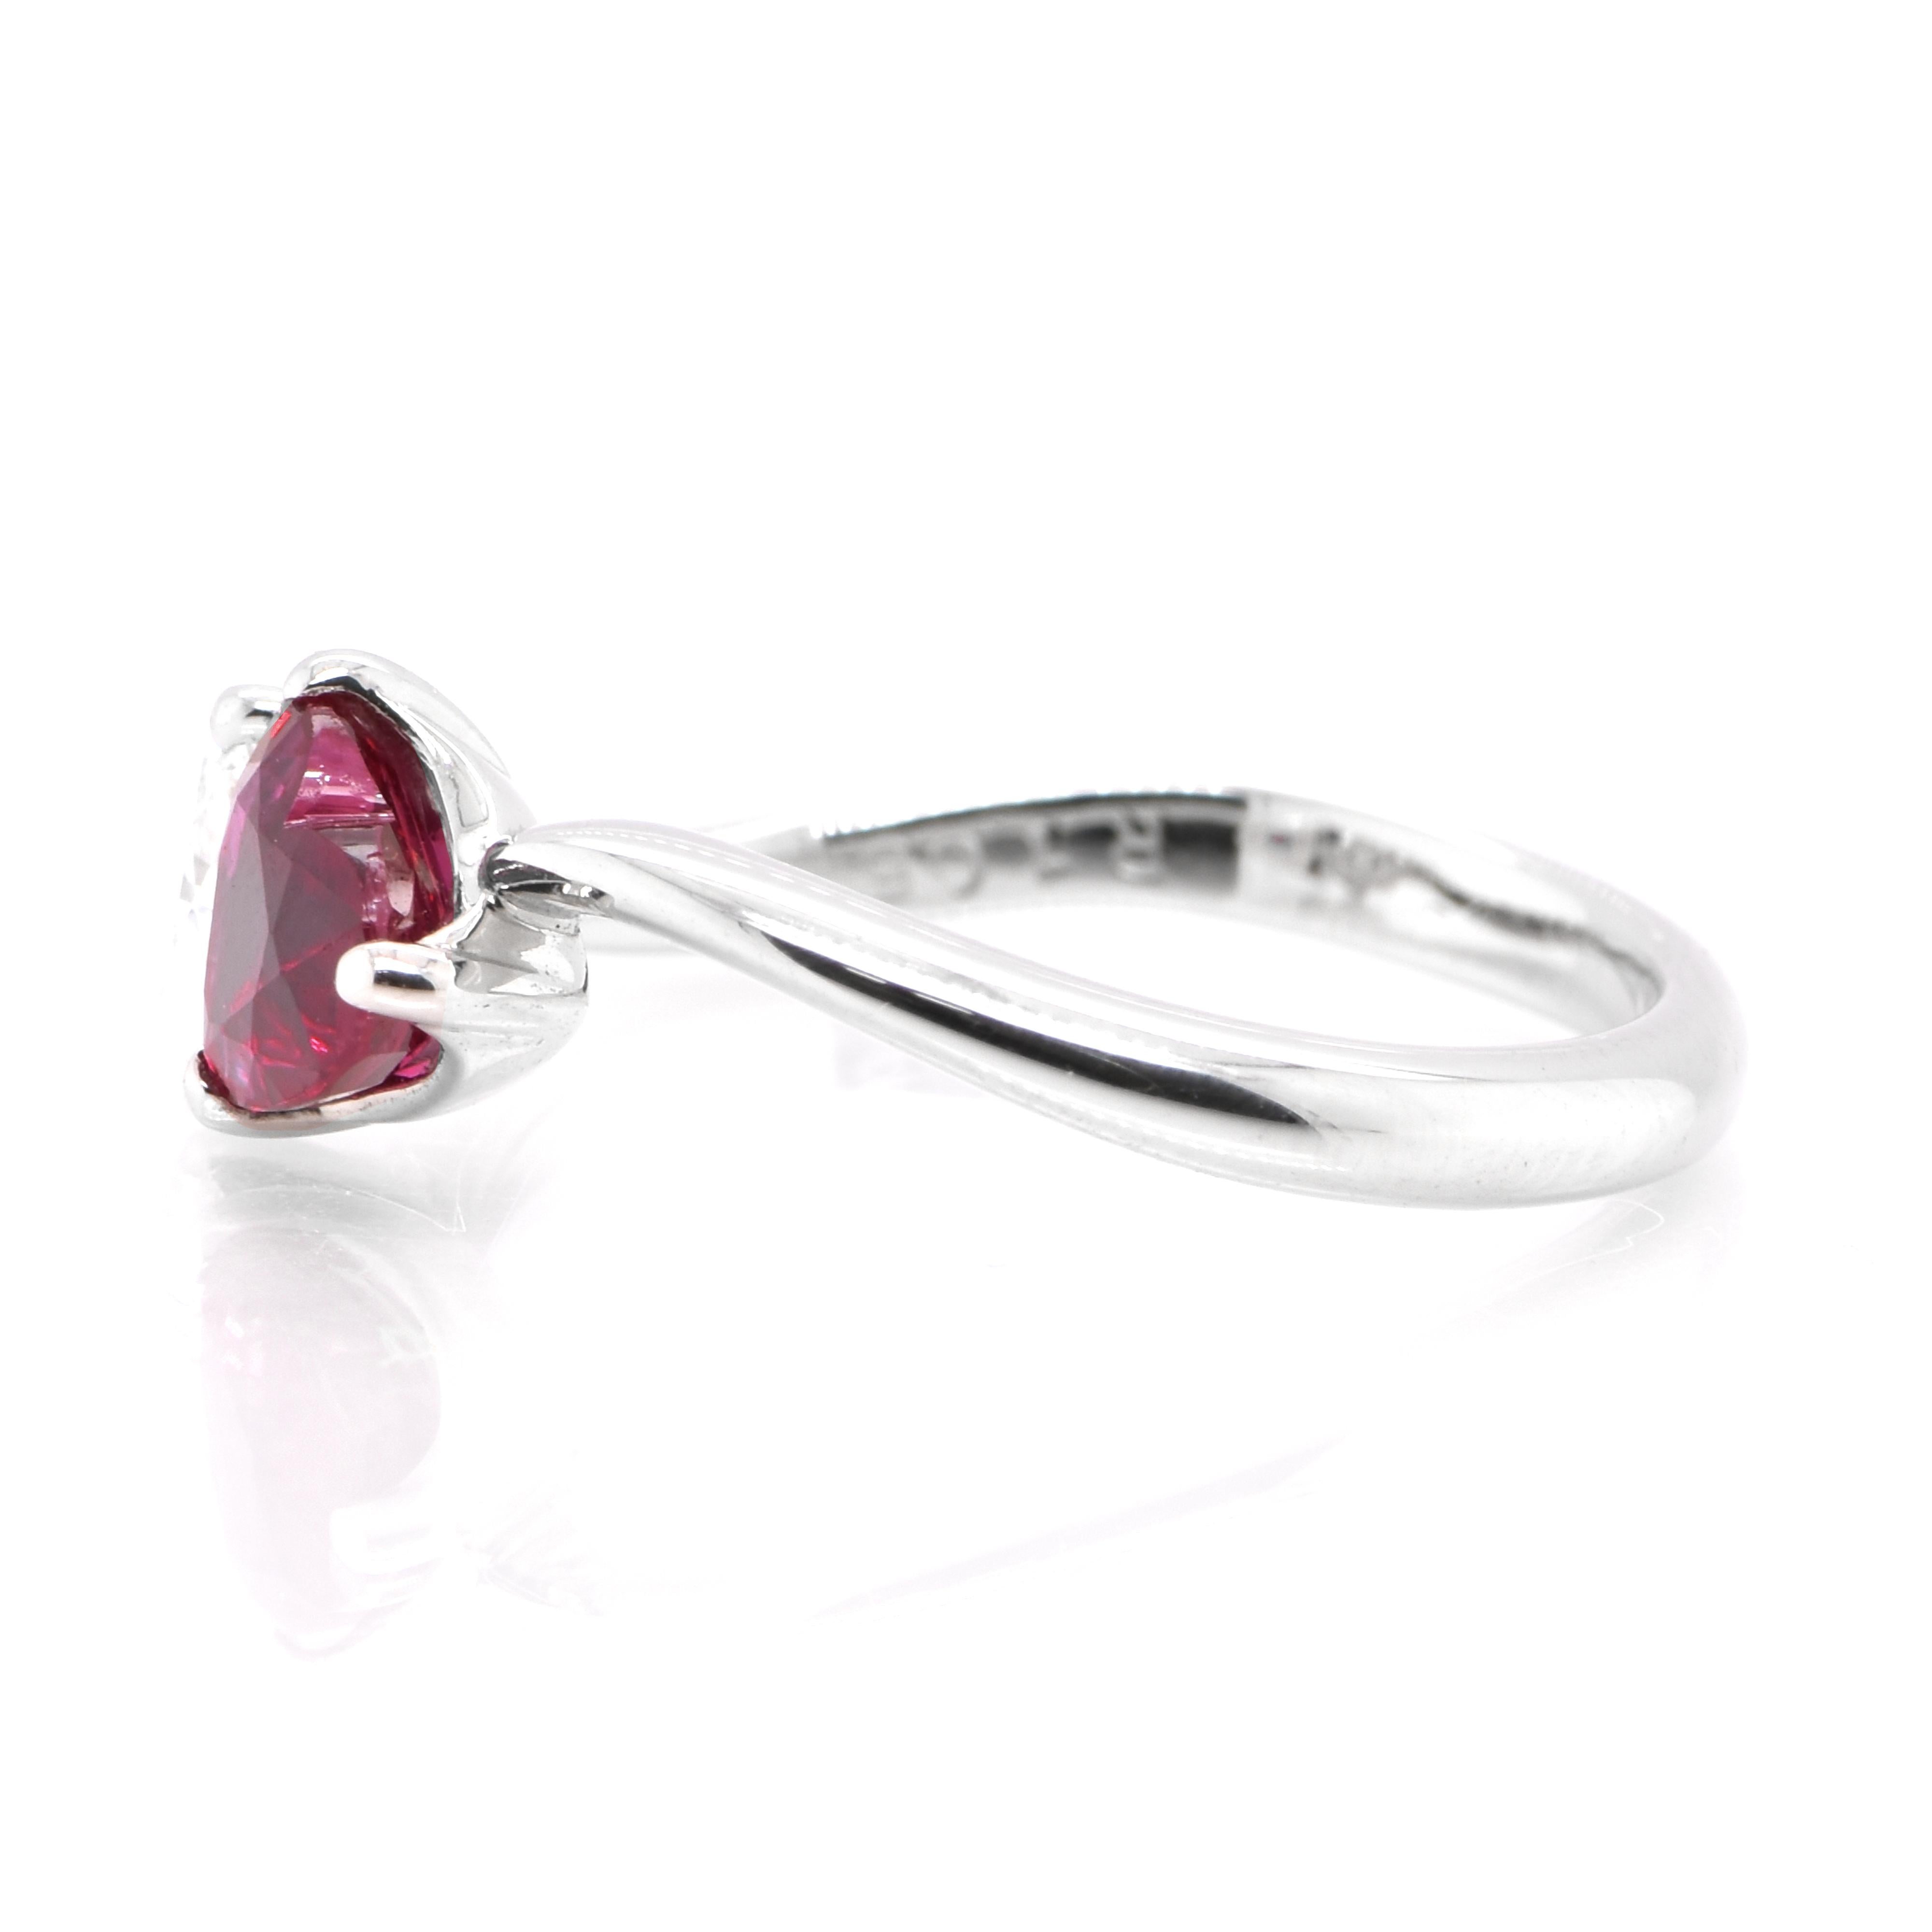 Heart Cut 1.05 Carat Natural Heart-Cut Ruby and Diamond Ring set in Platinum